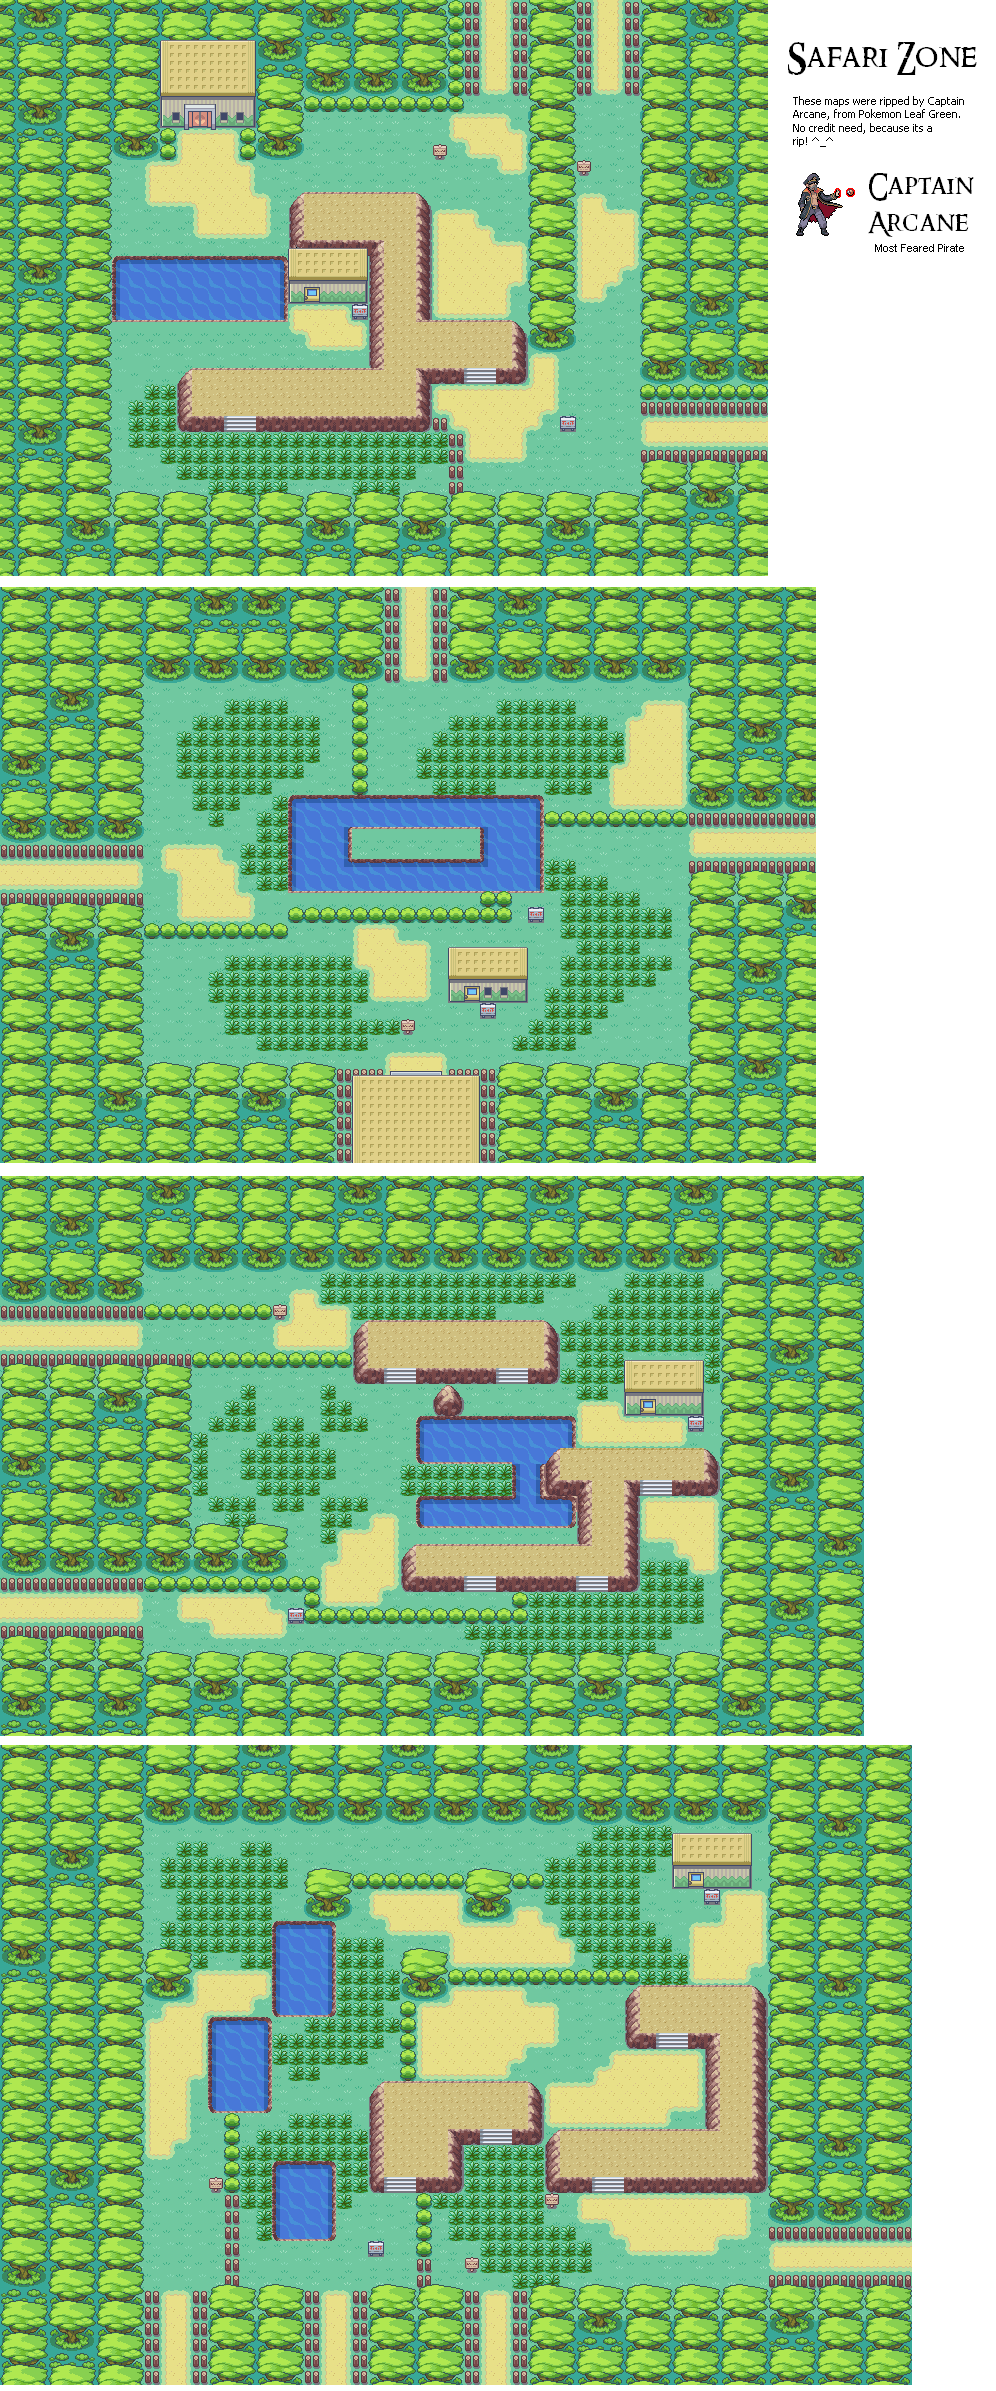 Pokémon FireRed / LeafGreen - Safari Zone